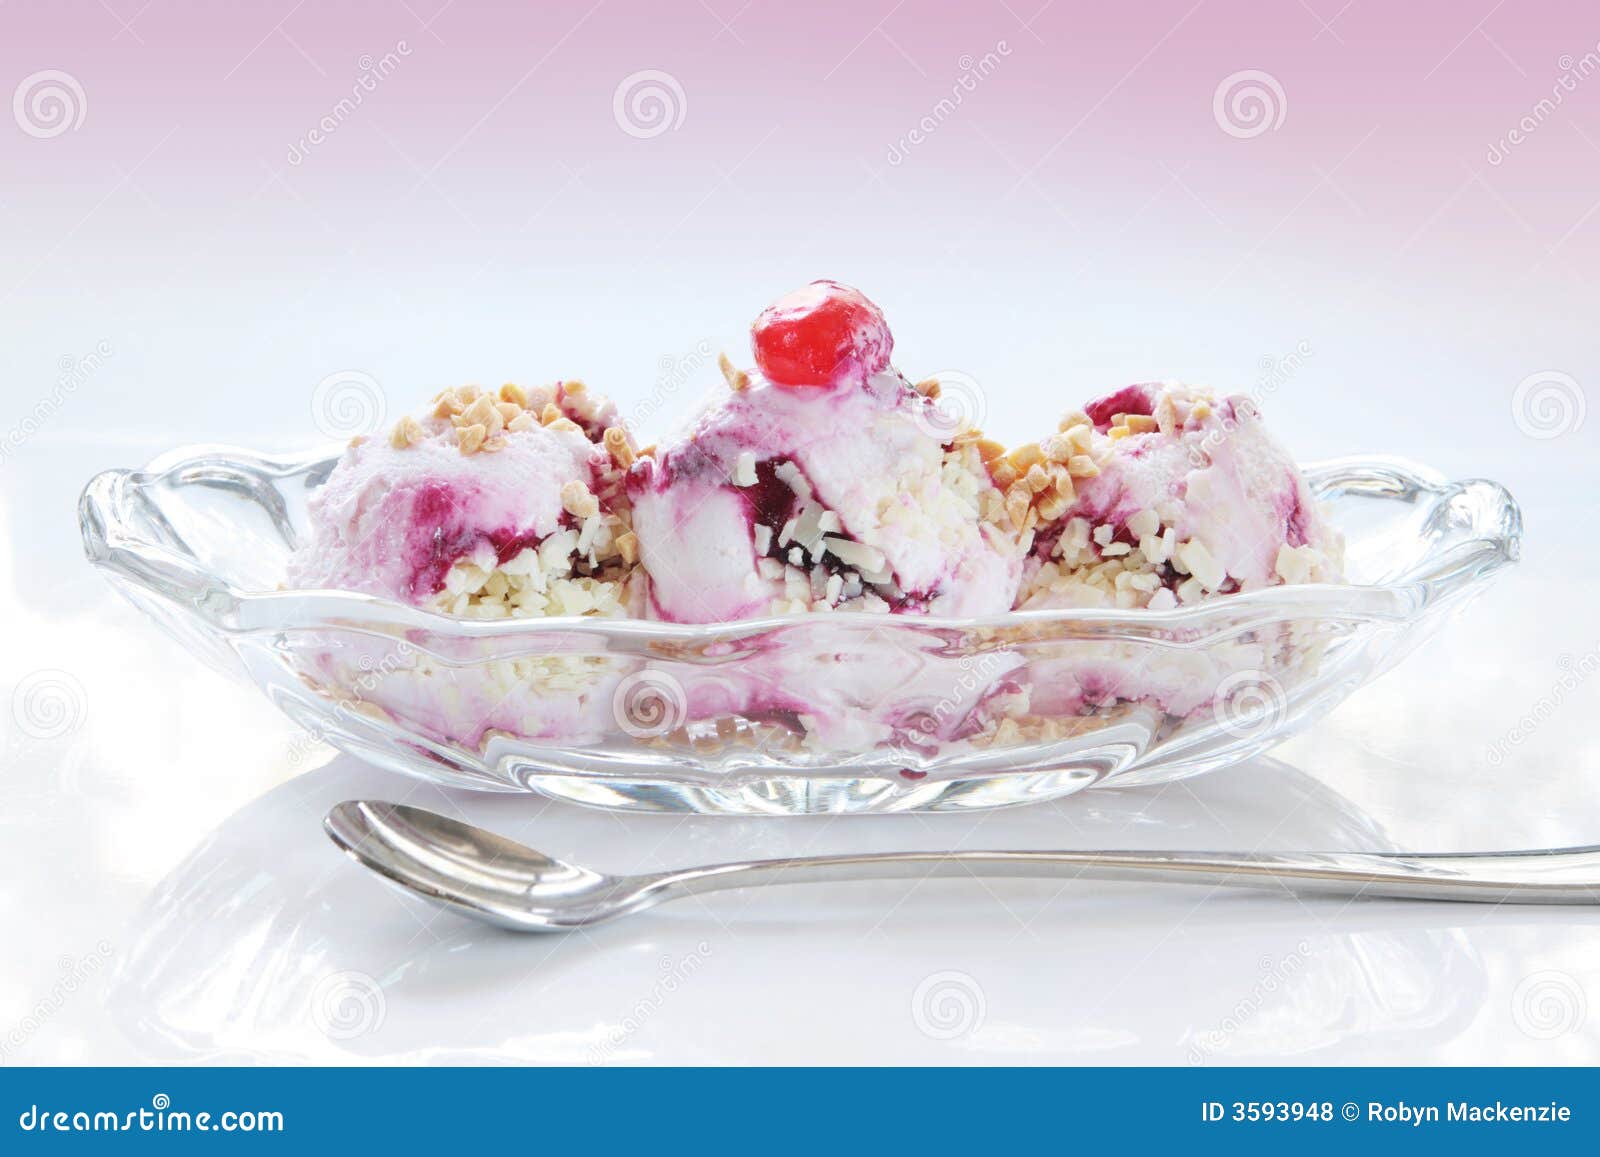 icecream sundae